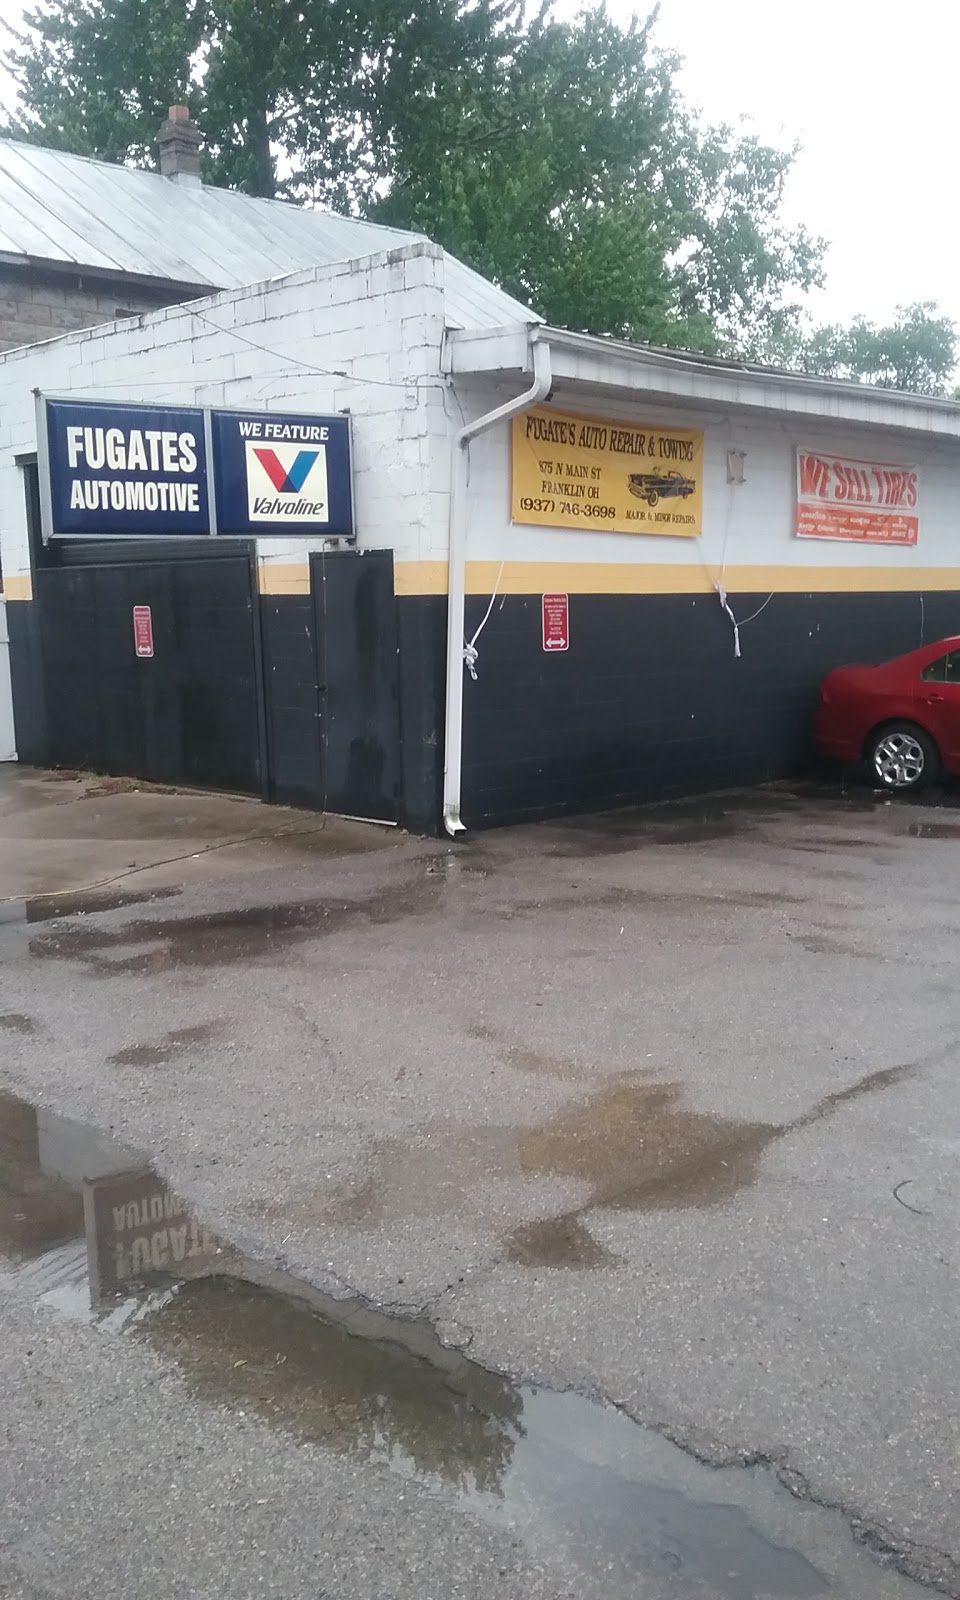 Fugates Auto Repair & Towing | 875 N Main St, Franklin, OH 45005 | Phone: (937) 746-3698